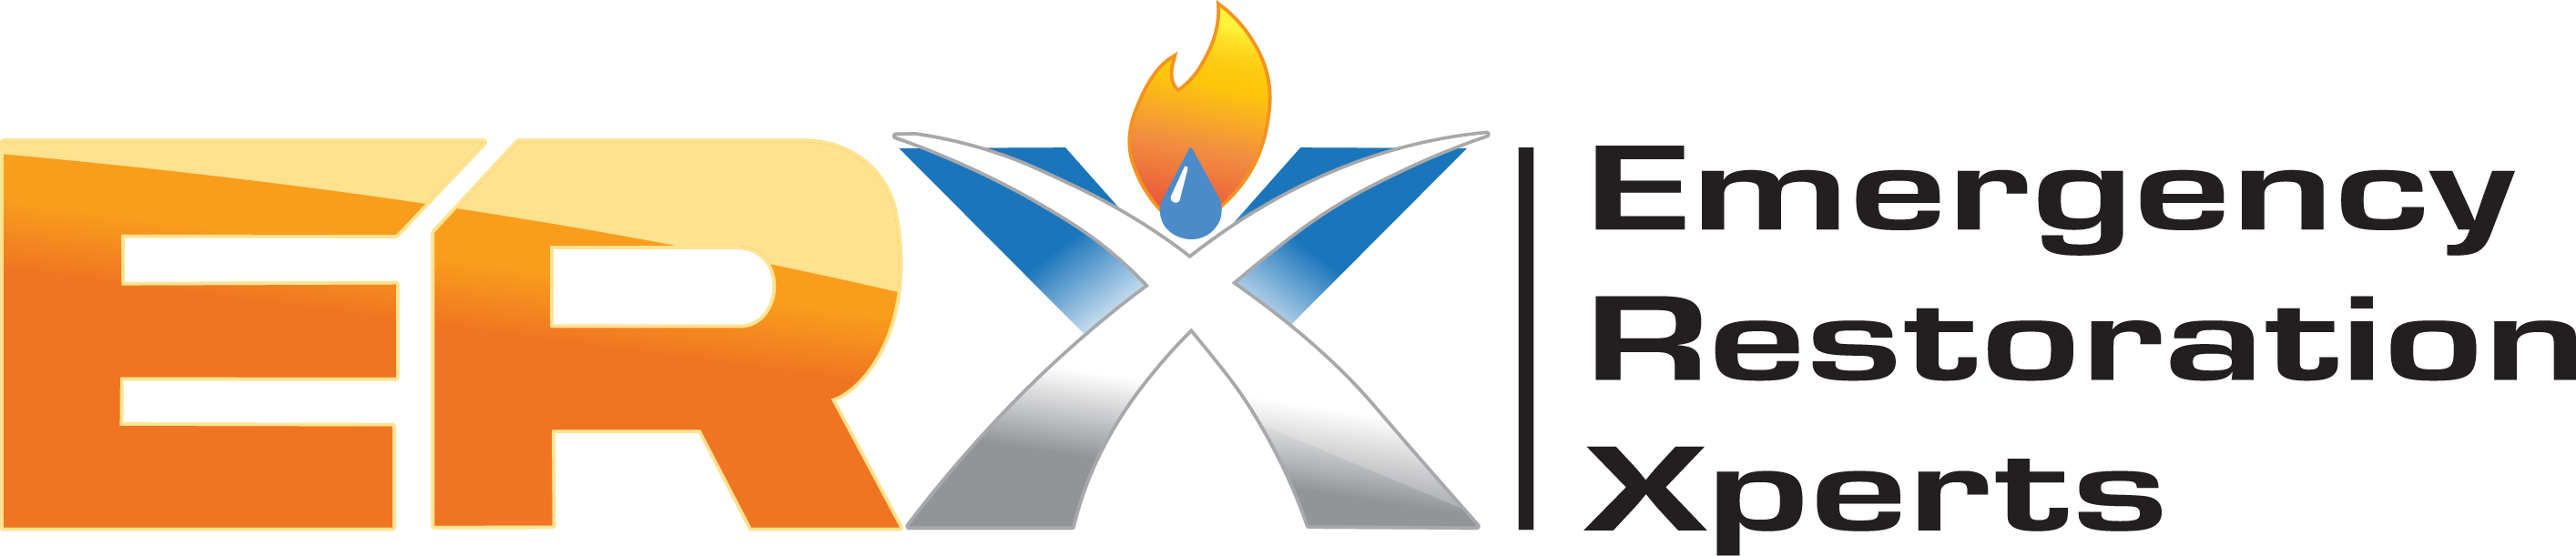 Emergency Restoration Xperts Company Logo